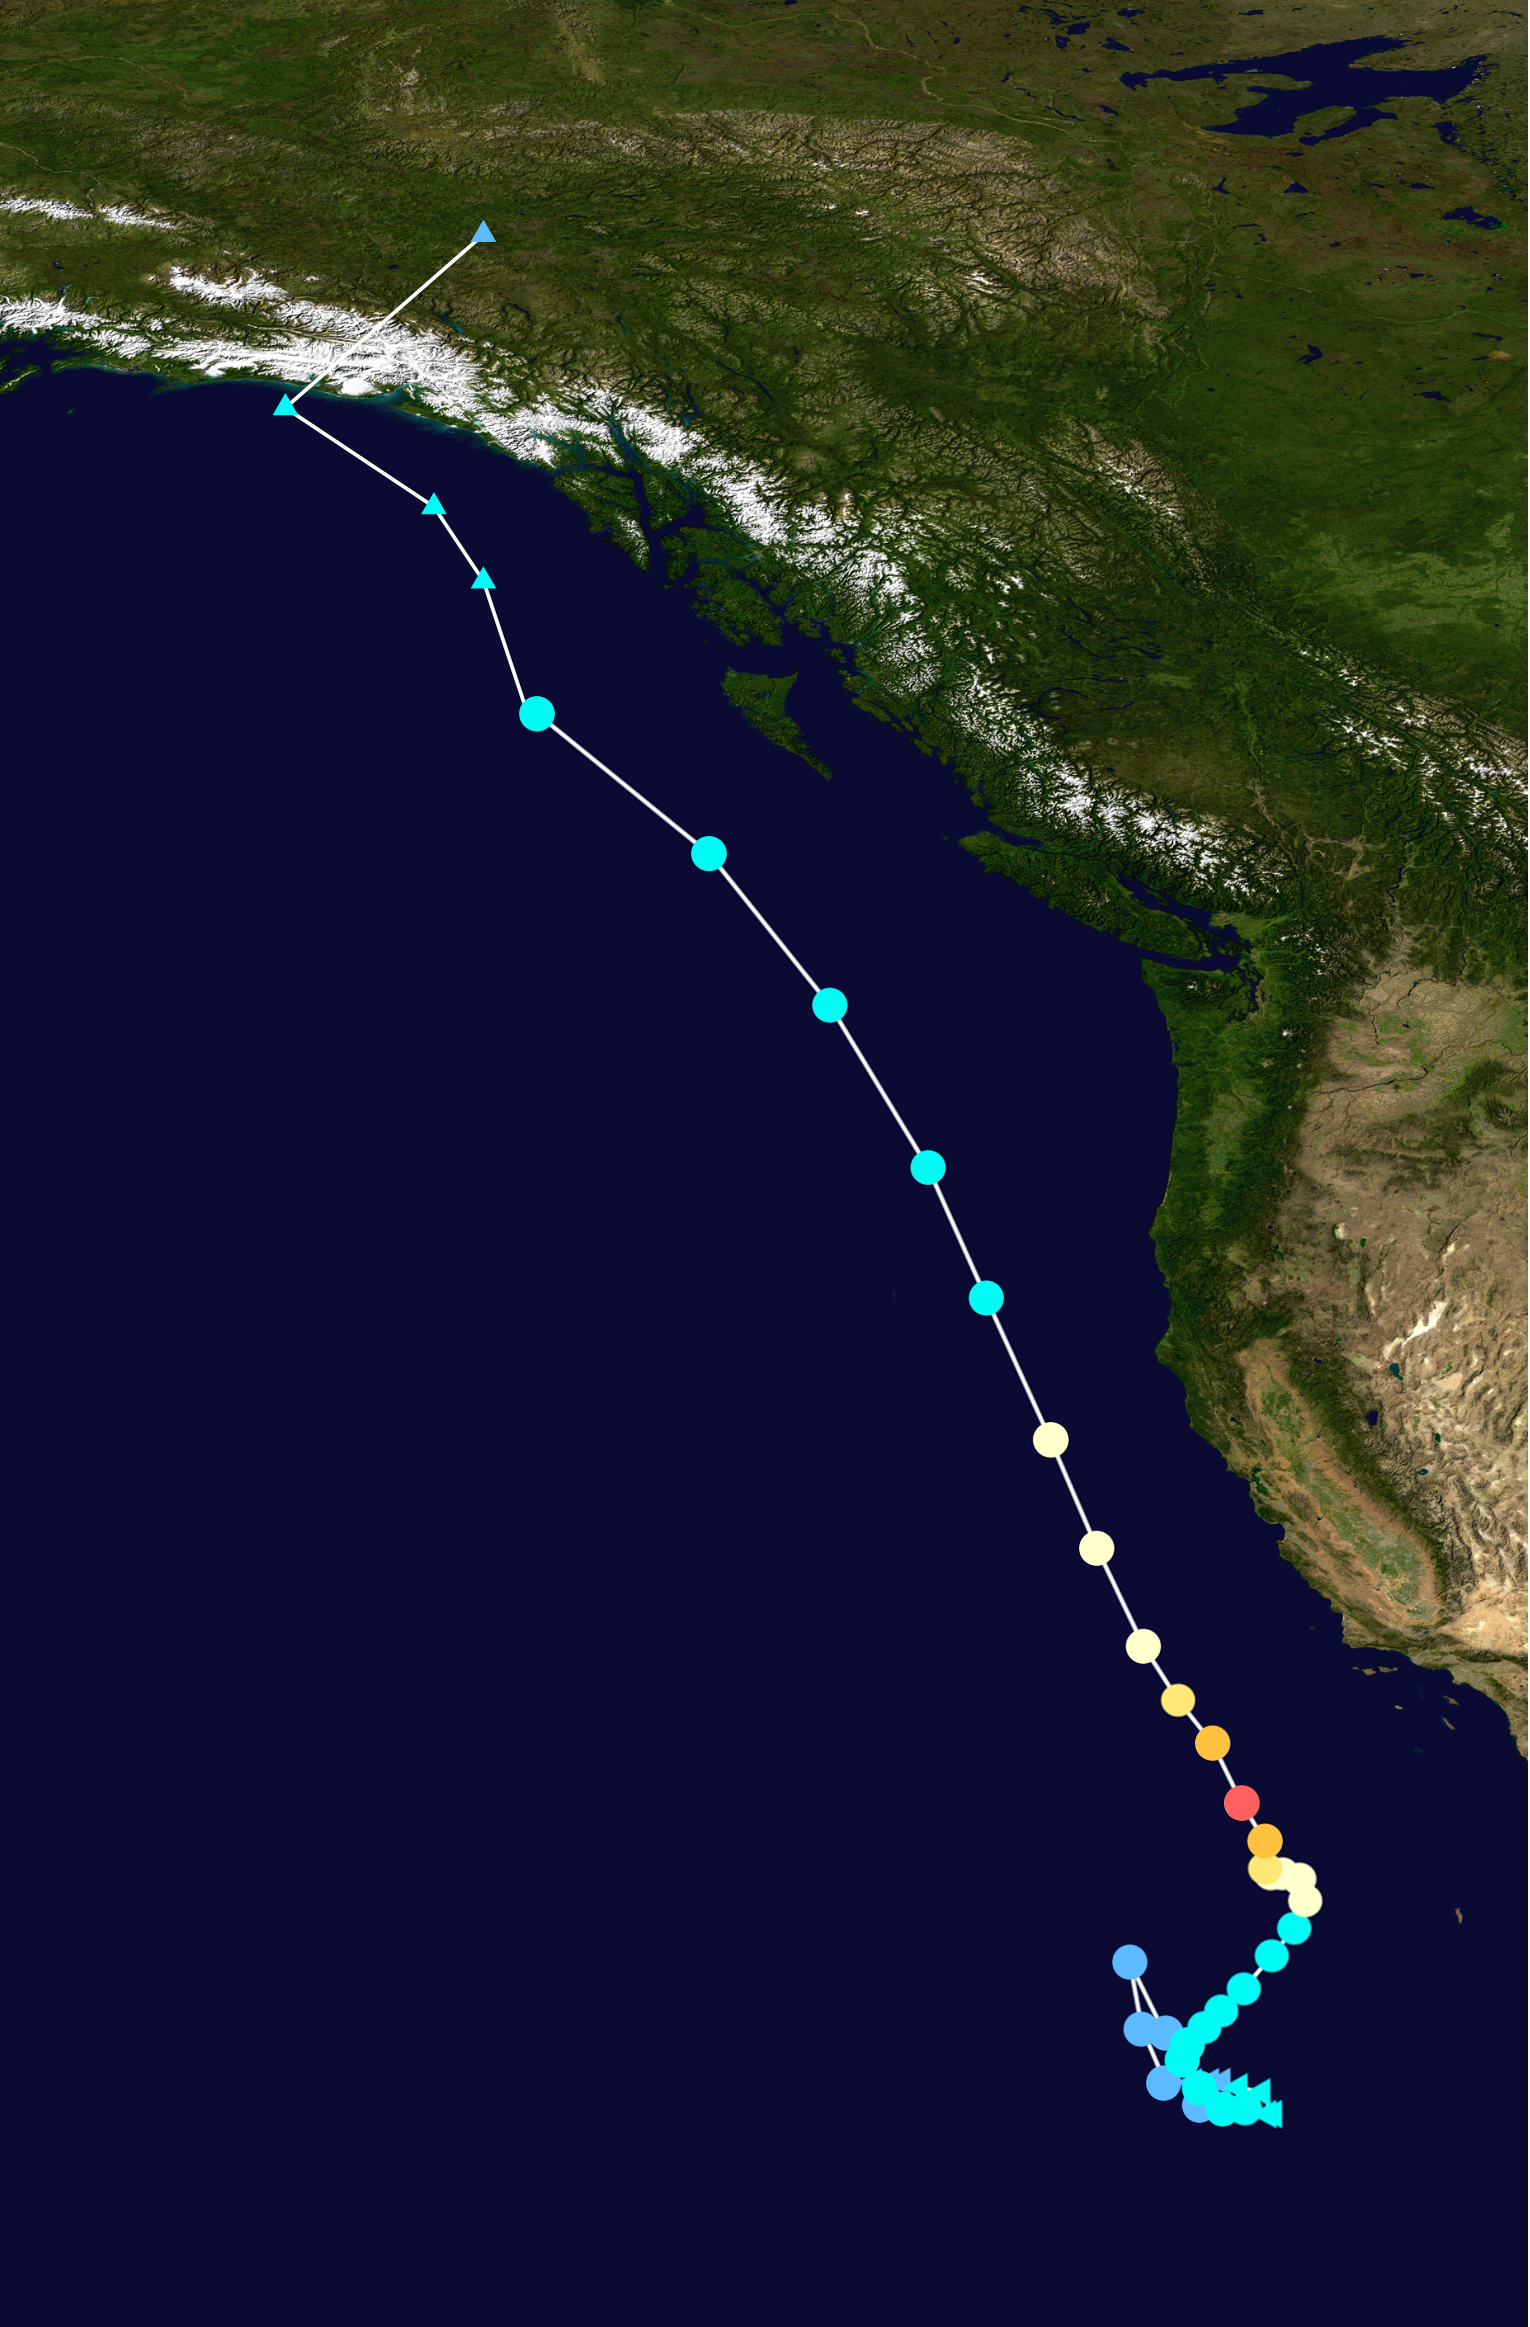 California Hurricane Hypothetical Hurricanes Wiki FANDOM powered by